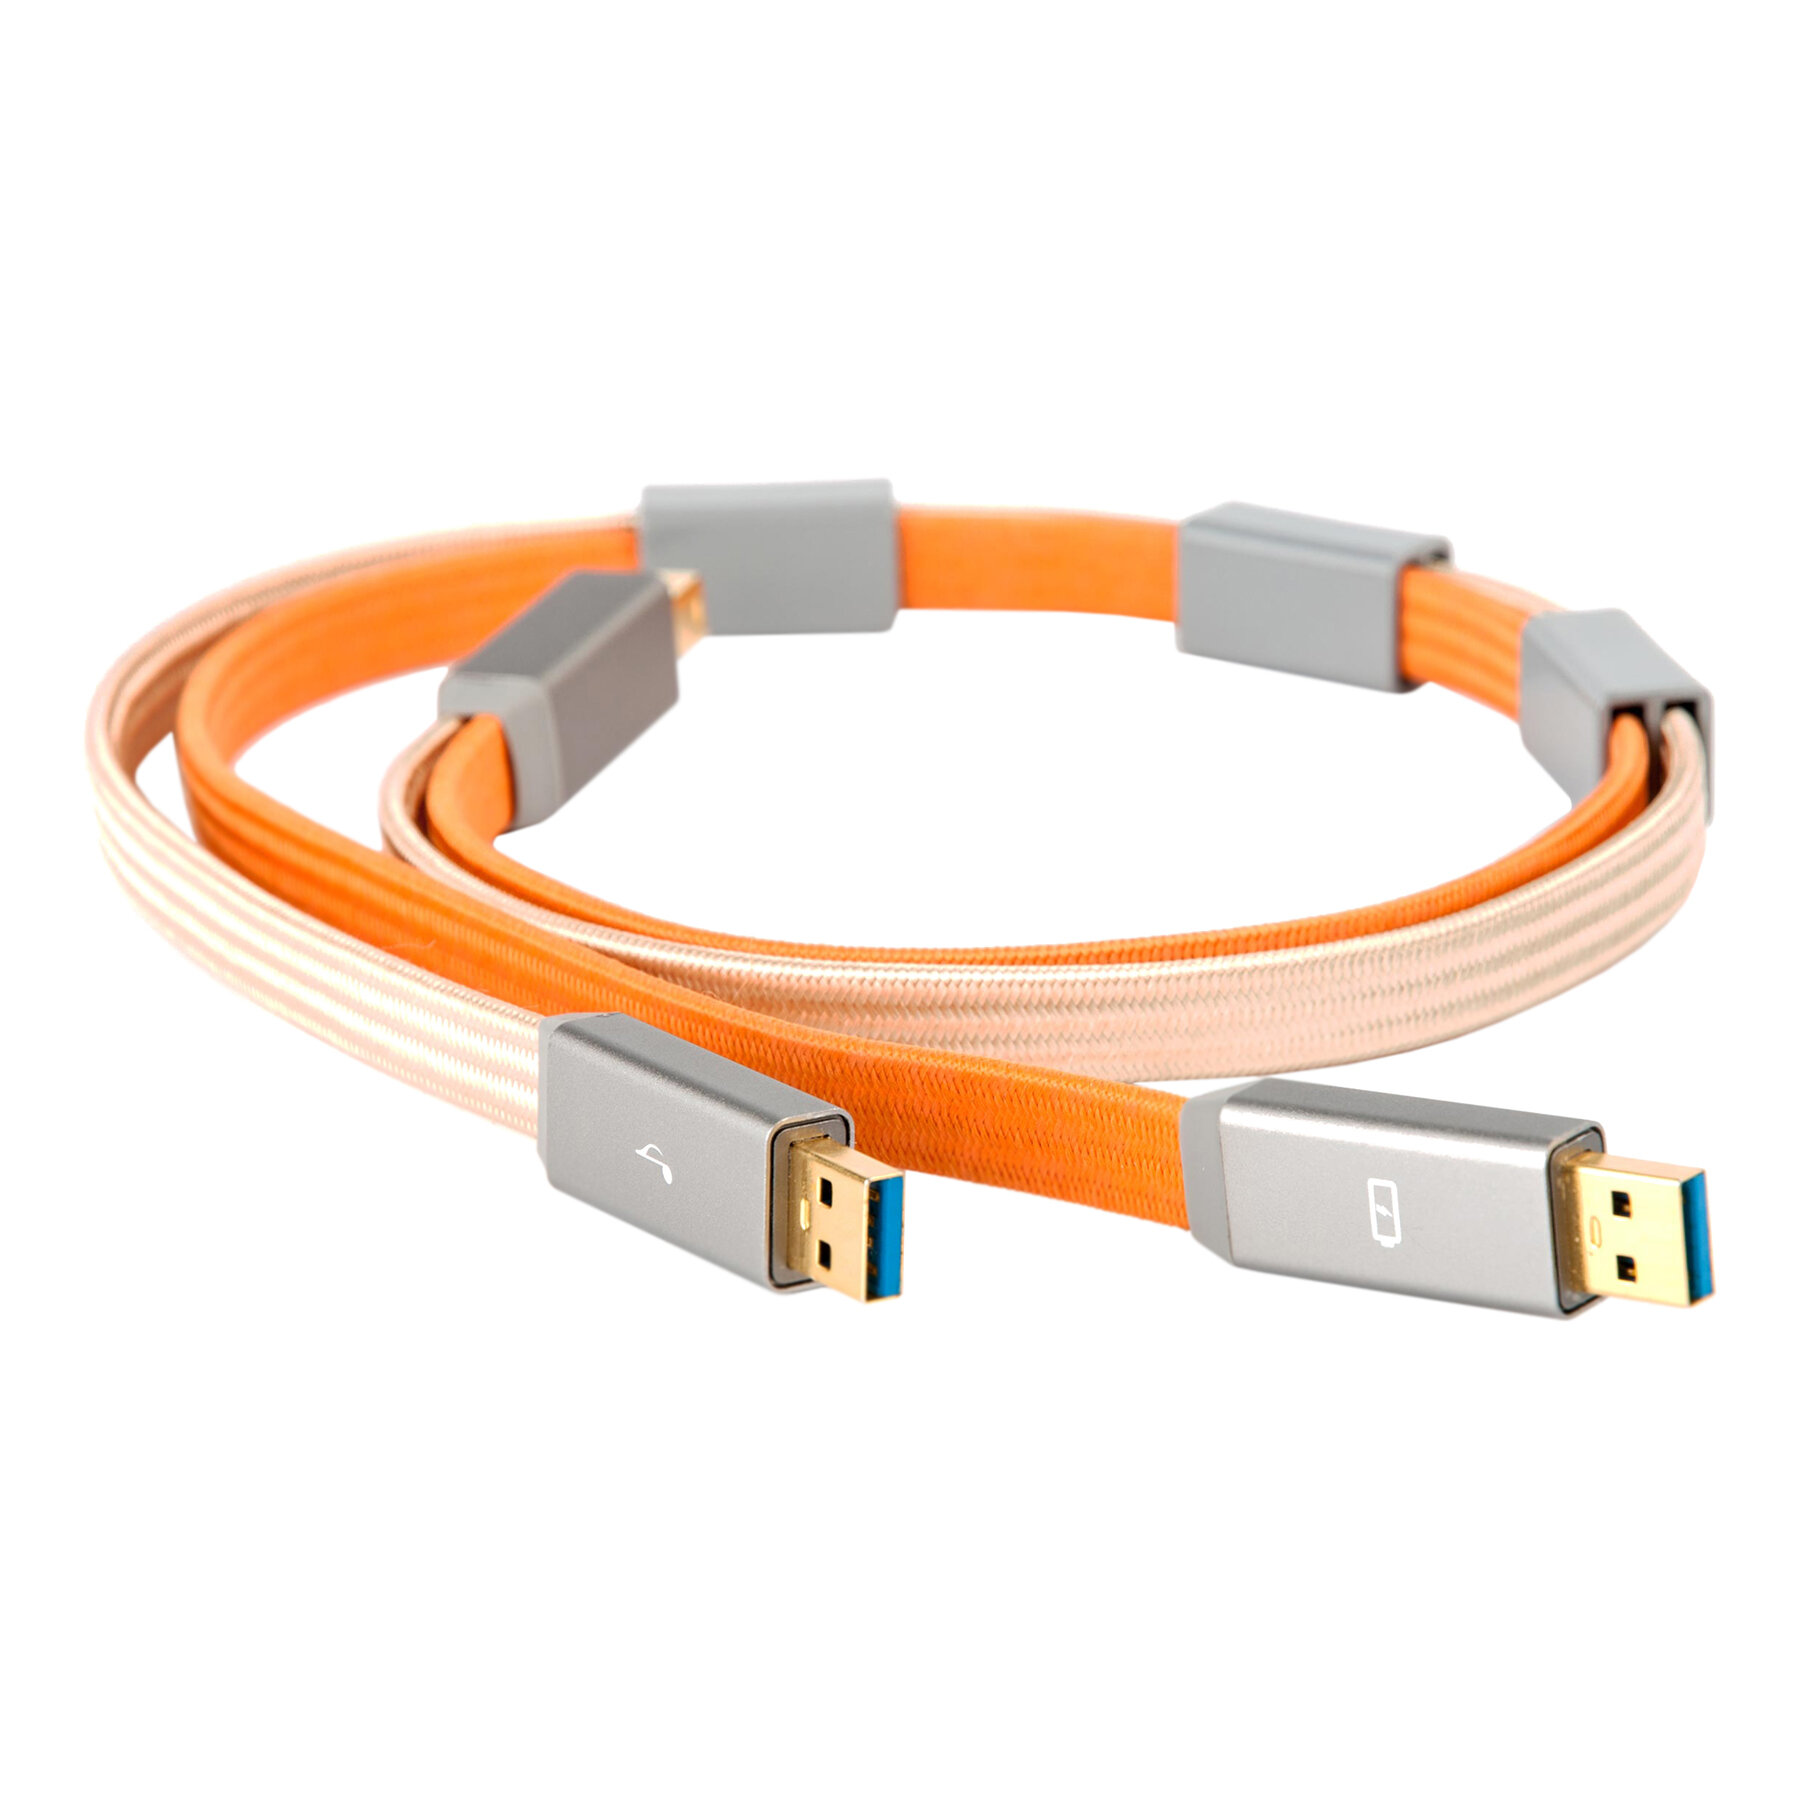 iFi Gemini cable 3.0 (USB 3.0 B connector) 0.7m